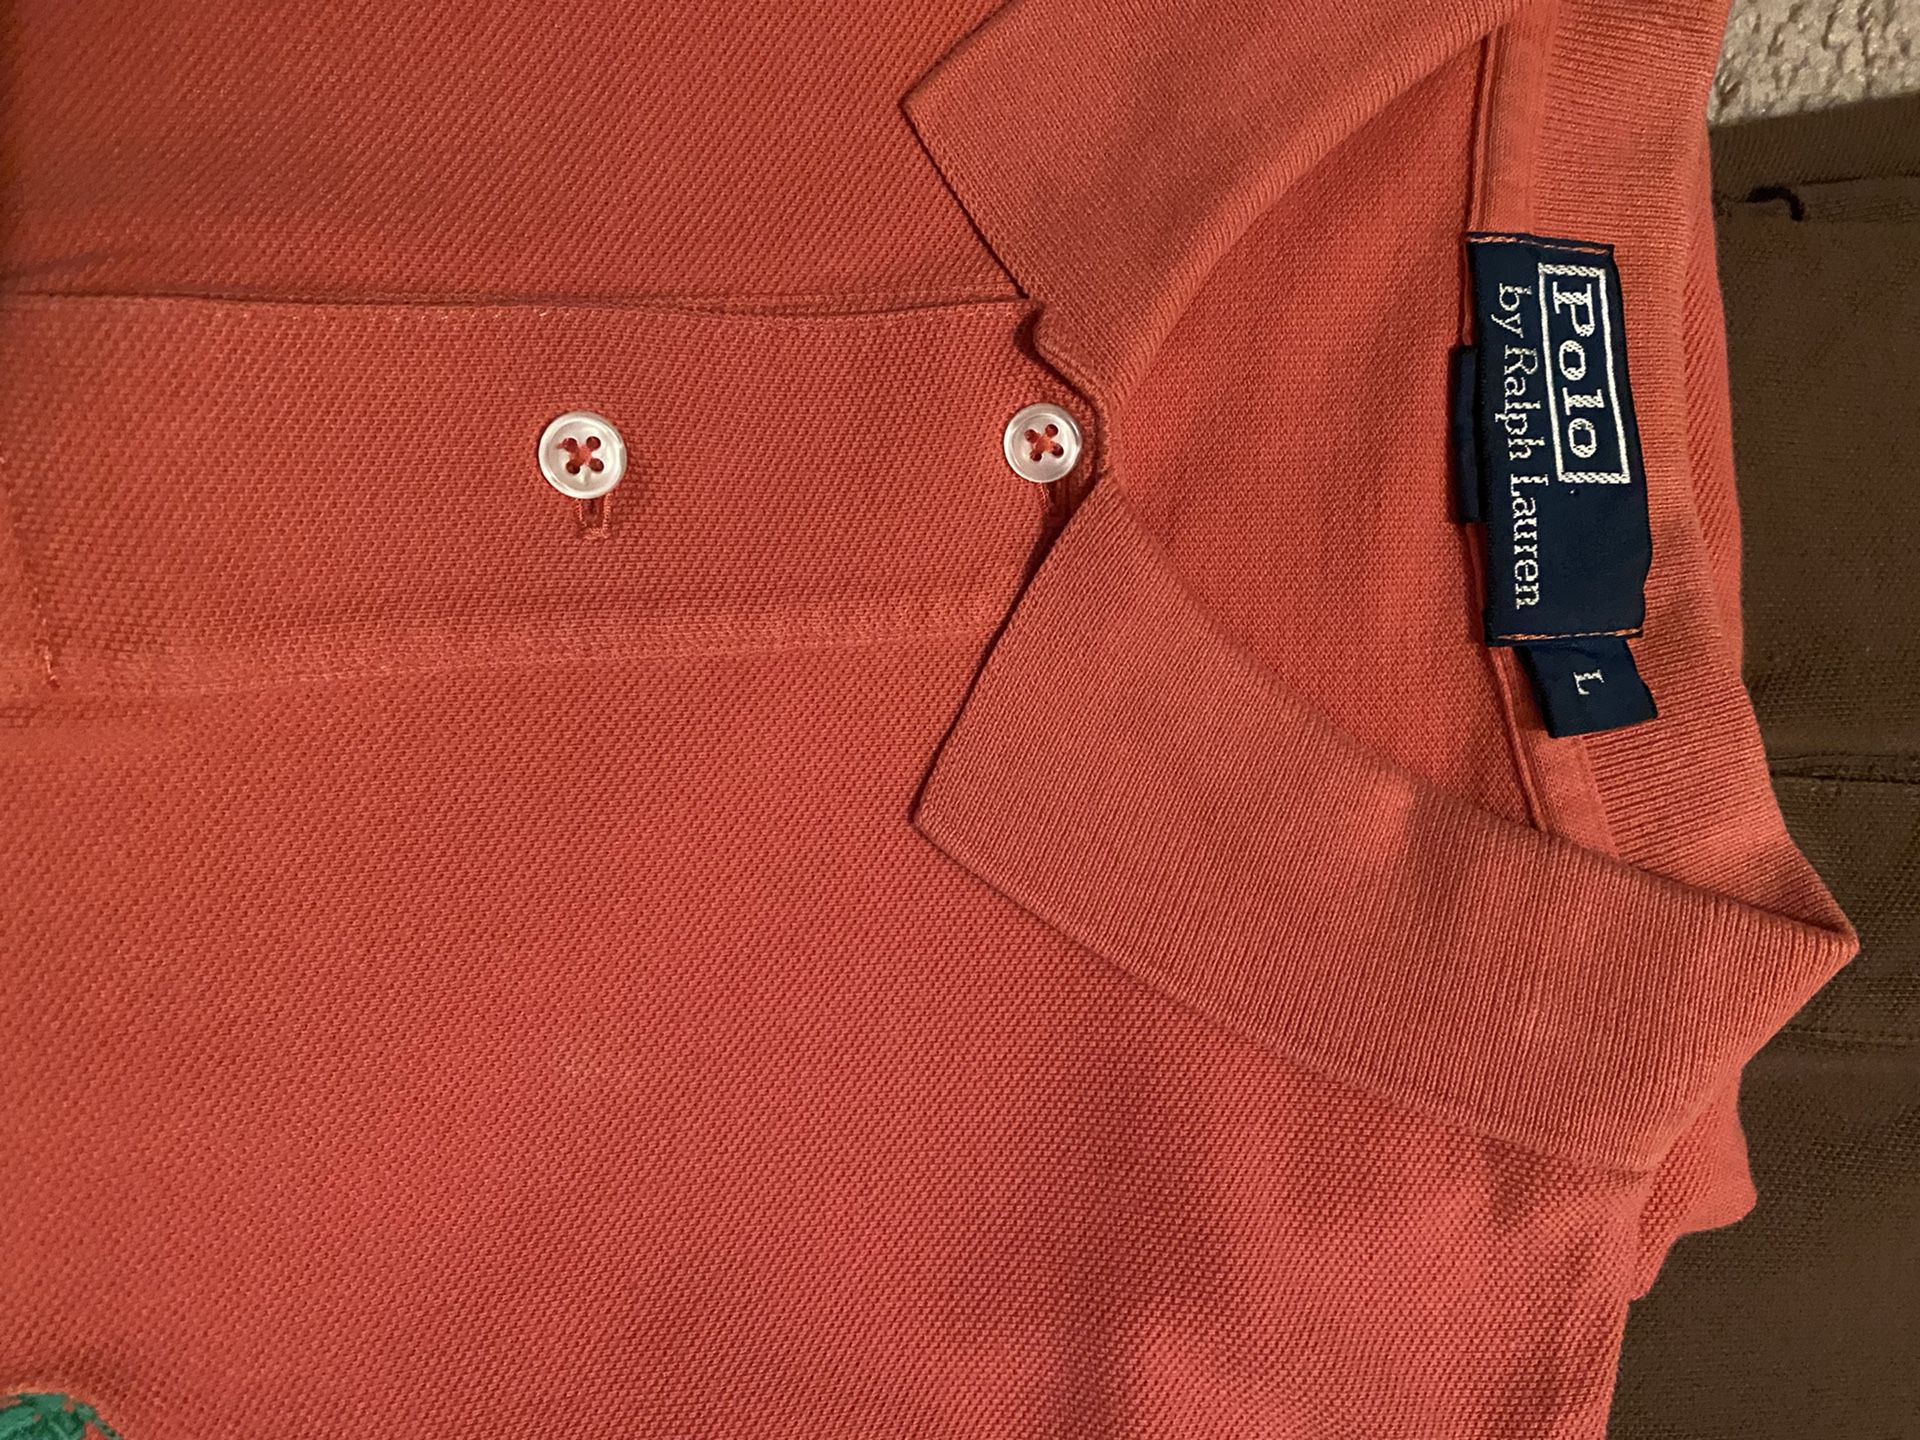 Ralph Lauren Polo Men’s Polo Shirt ( 4 EA ) and Get 1 Free 